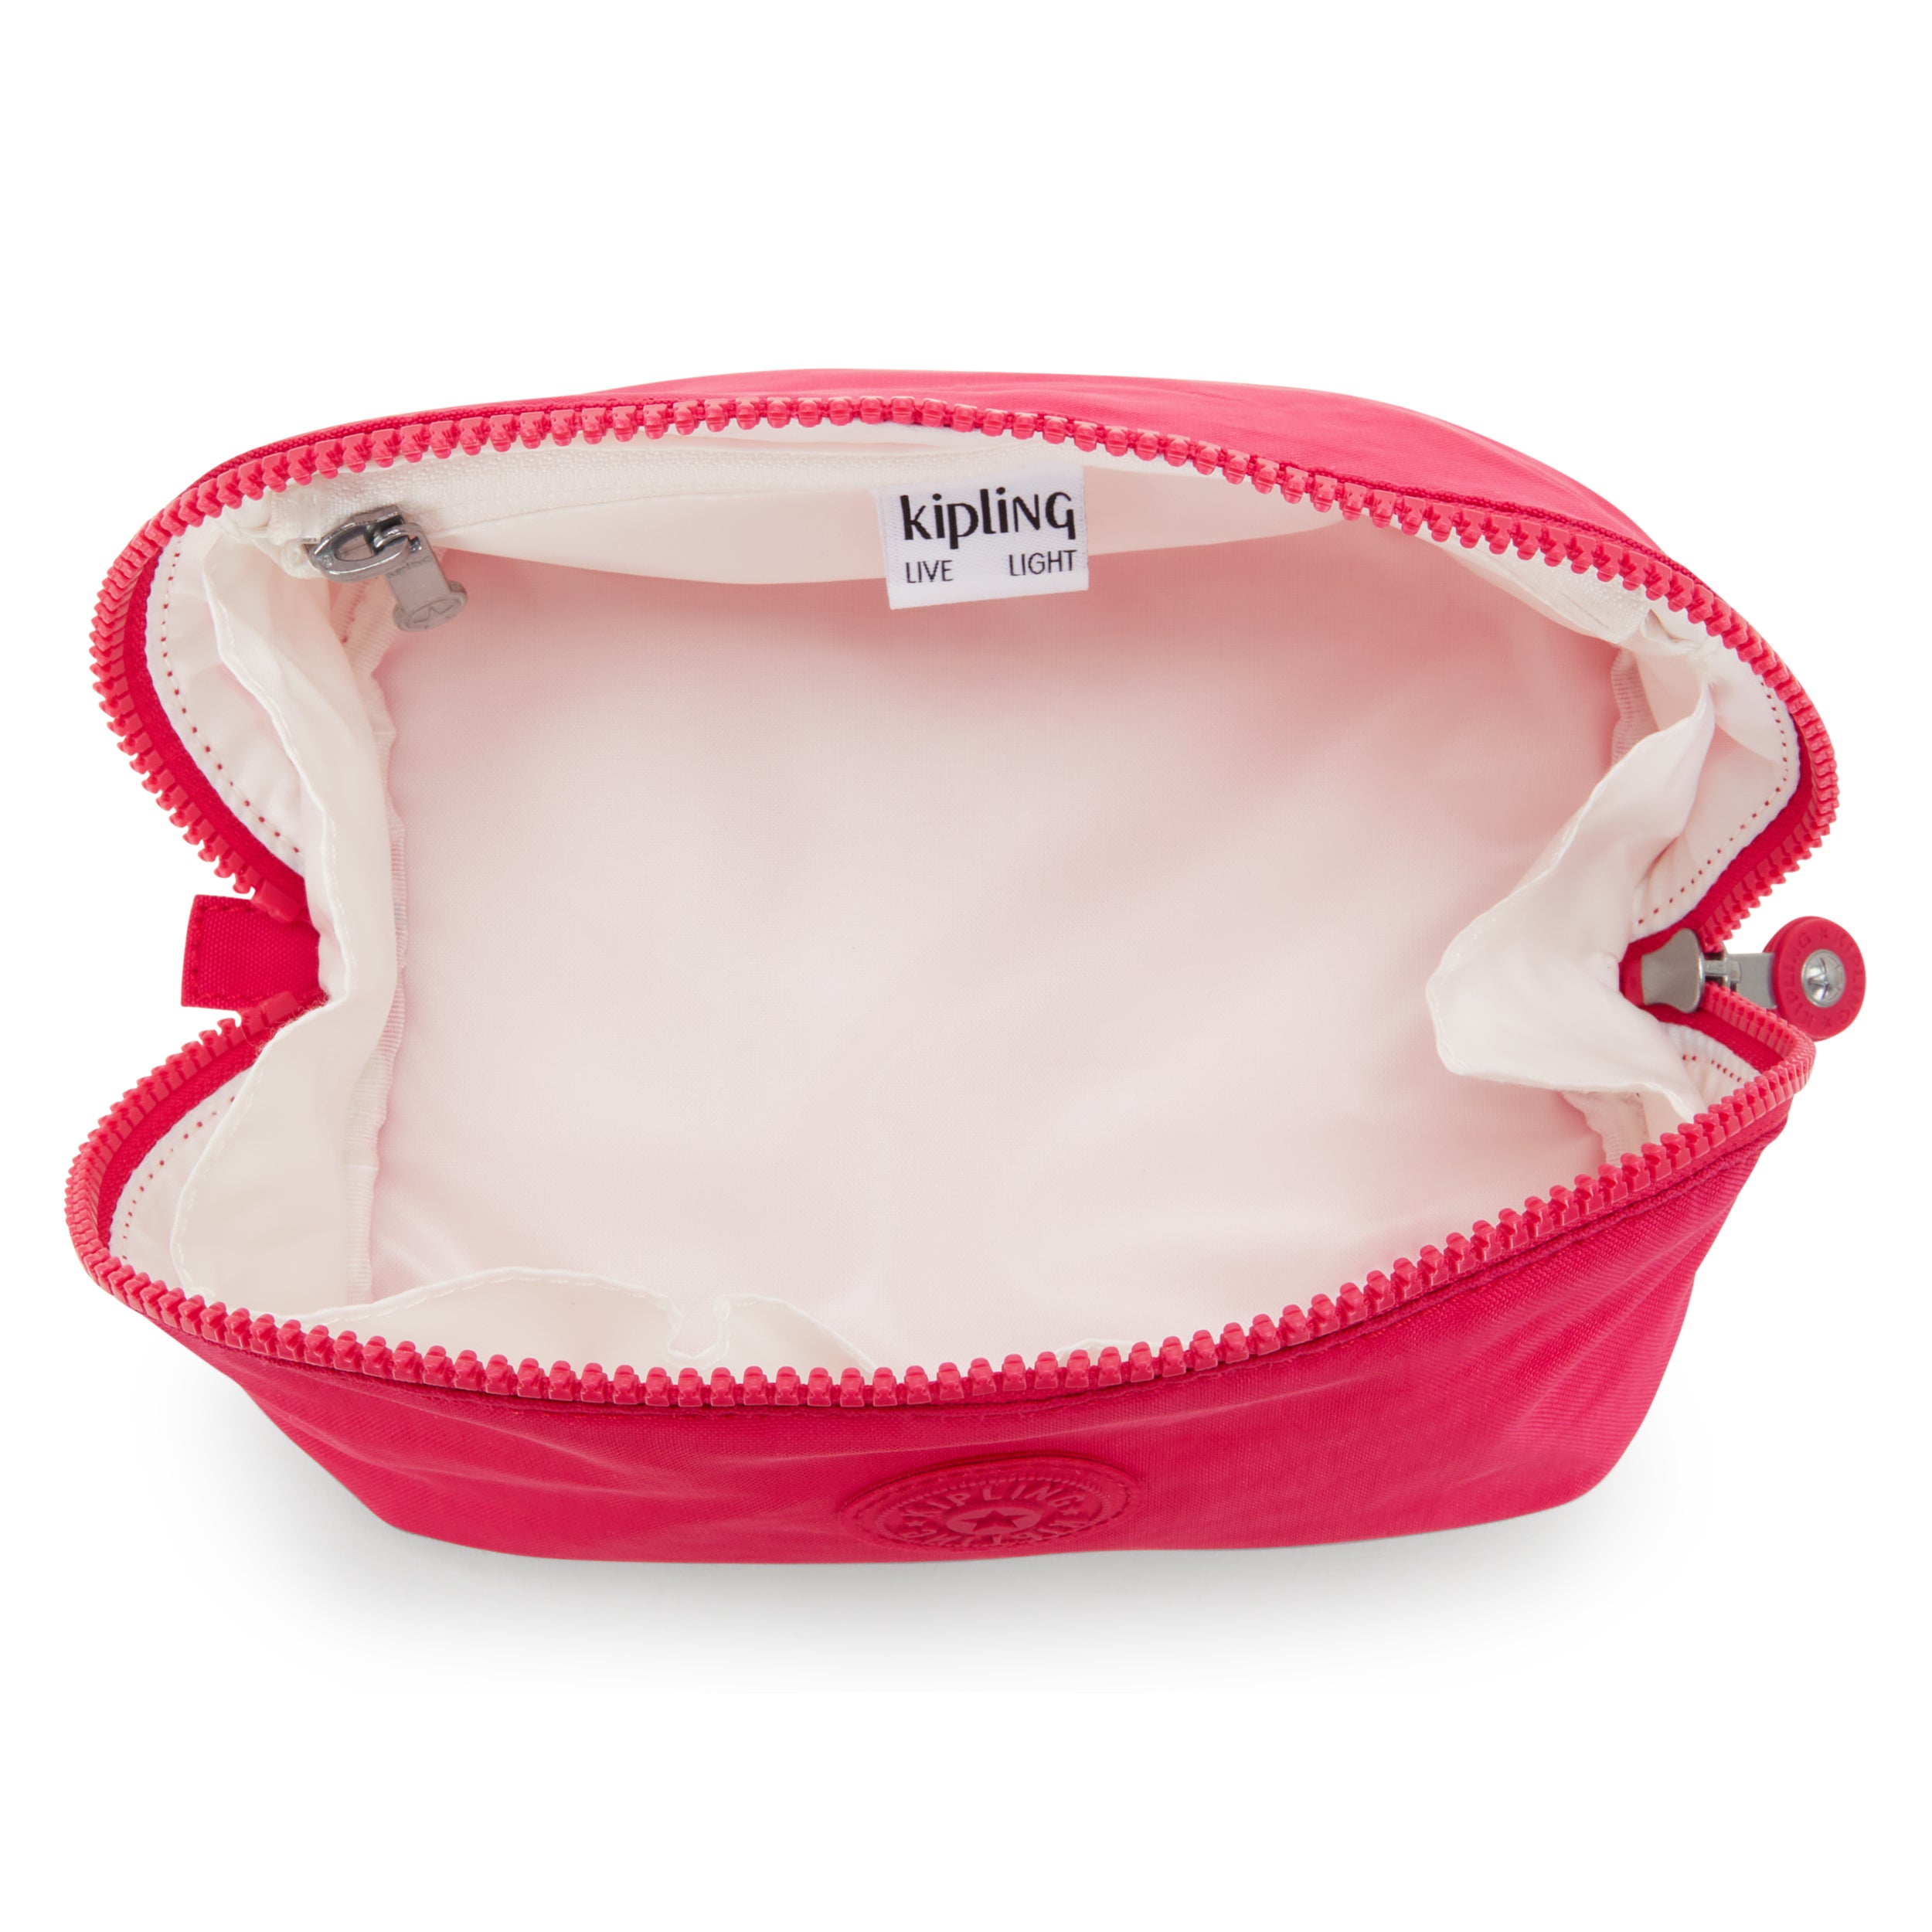 KIPLING-Mirko S-Small Toiletry Bag with Pockets-Confetti Pink-I6599-T73